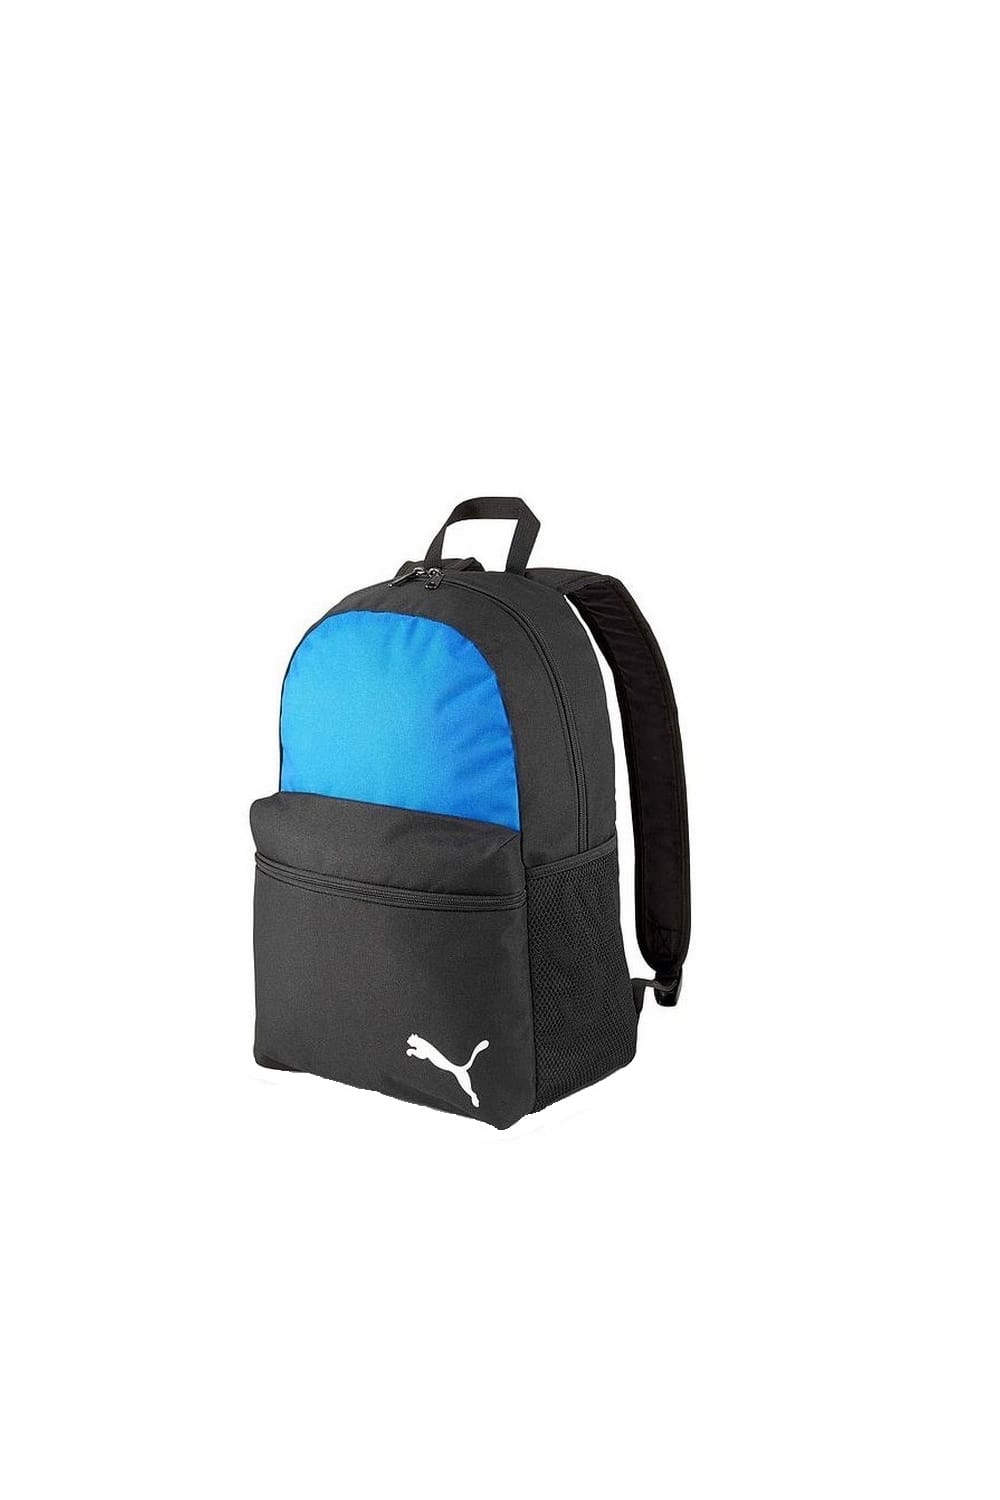 Team Goal 23 Core Backpack - Blue/Black